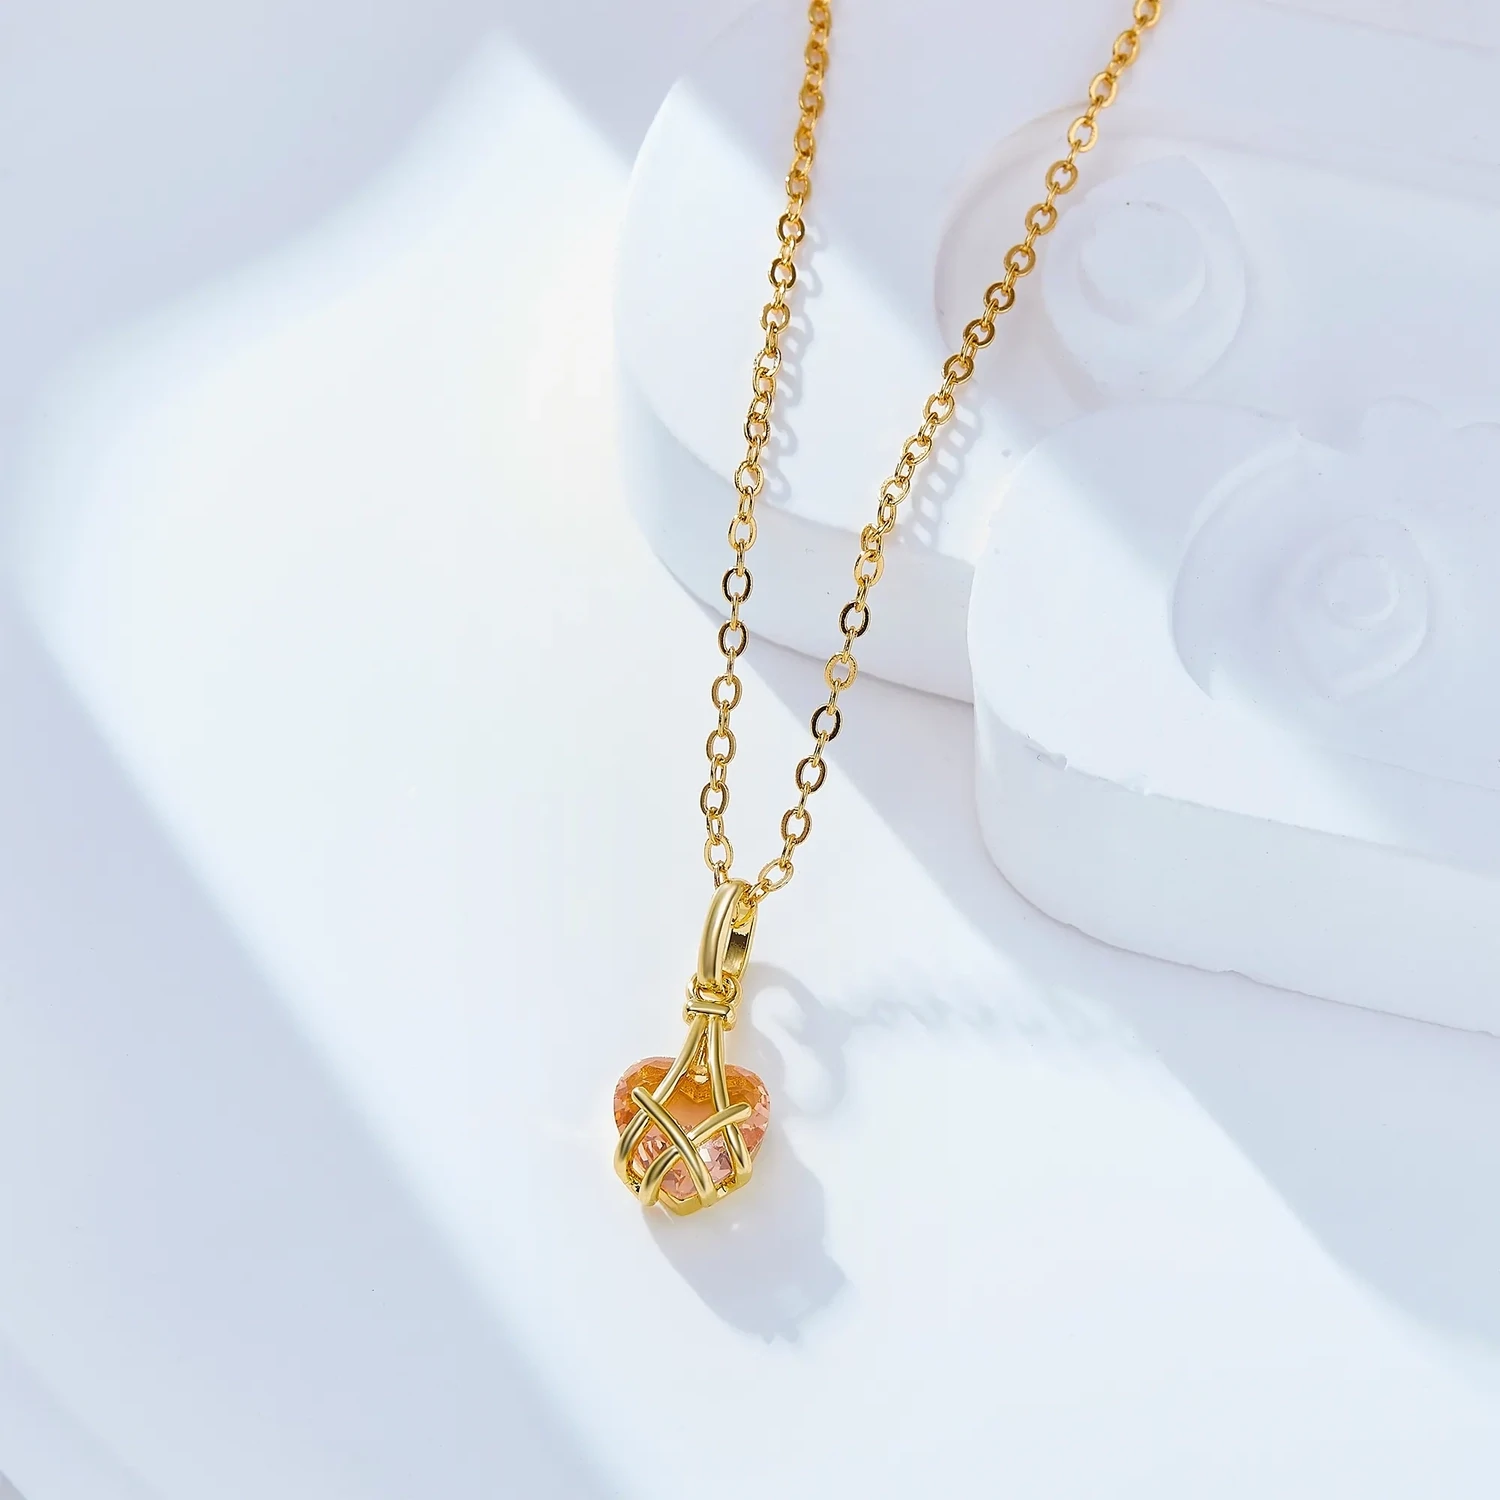 162X New Simple Colorful Fashion Jewelry Heart Shaped Pendant Women Gift-162X-Orange